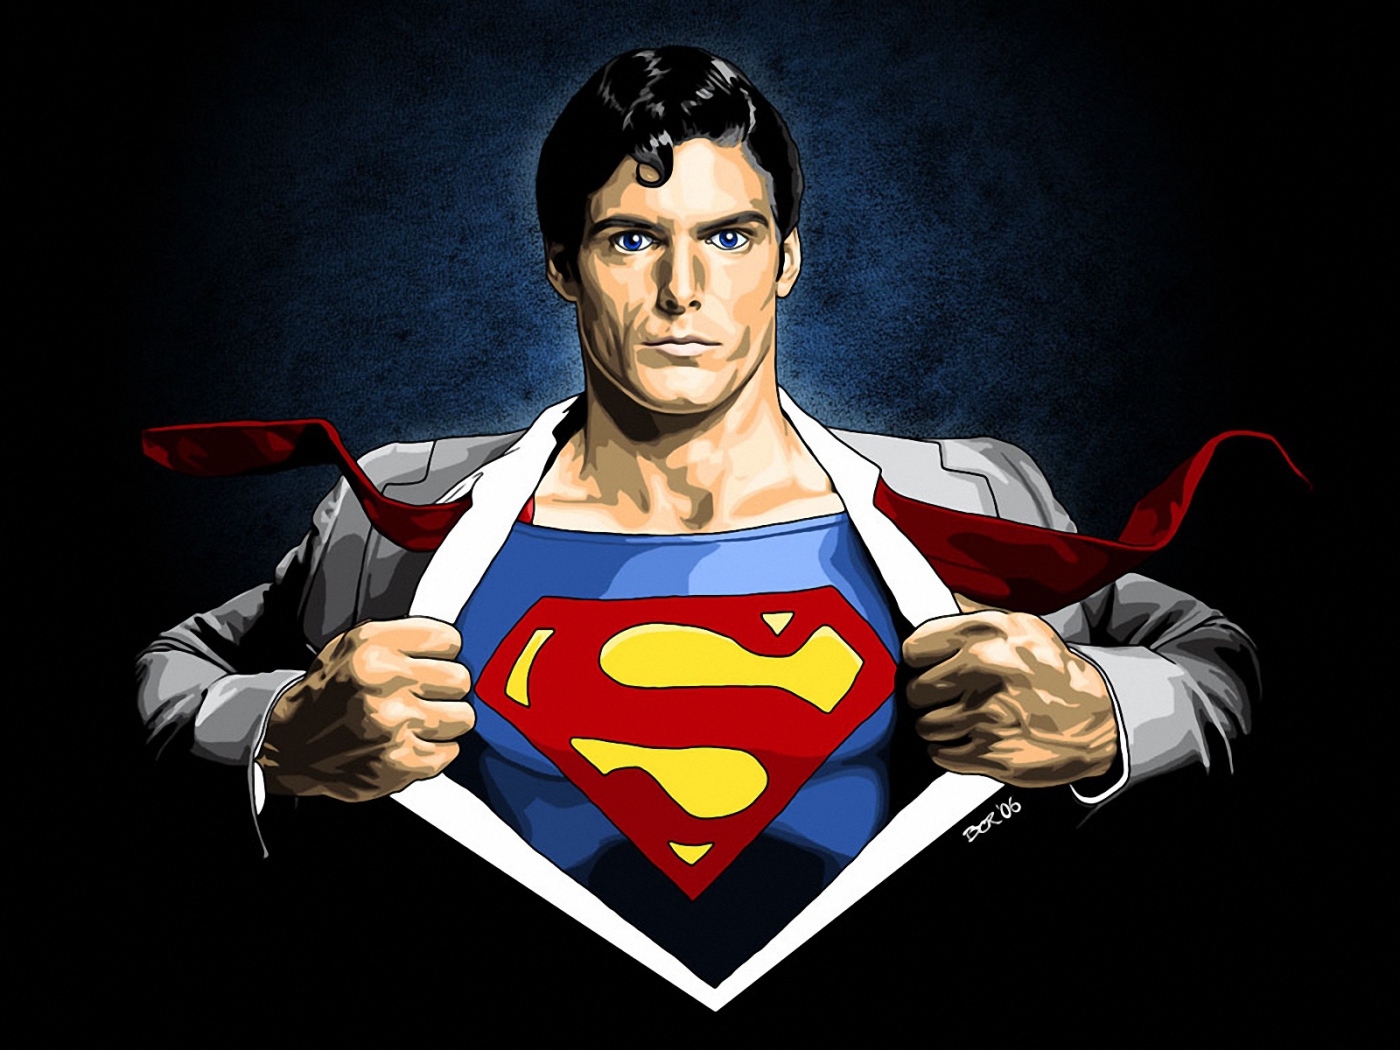 Superman not just a man